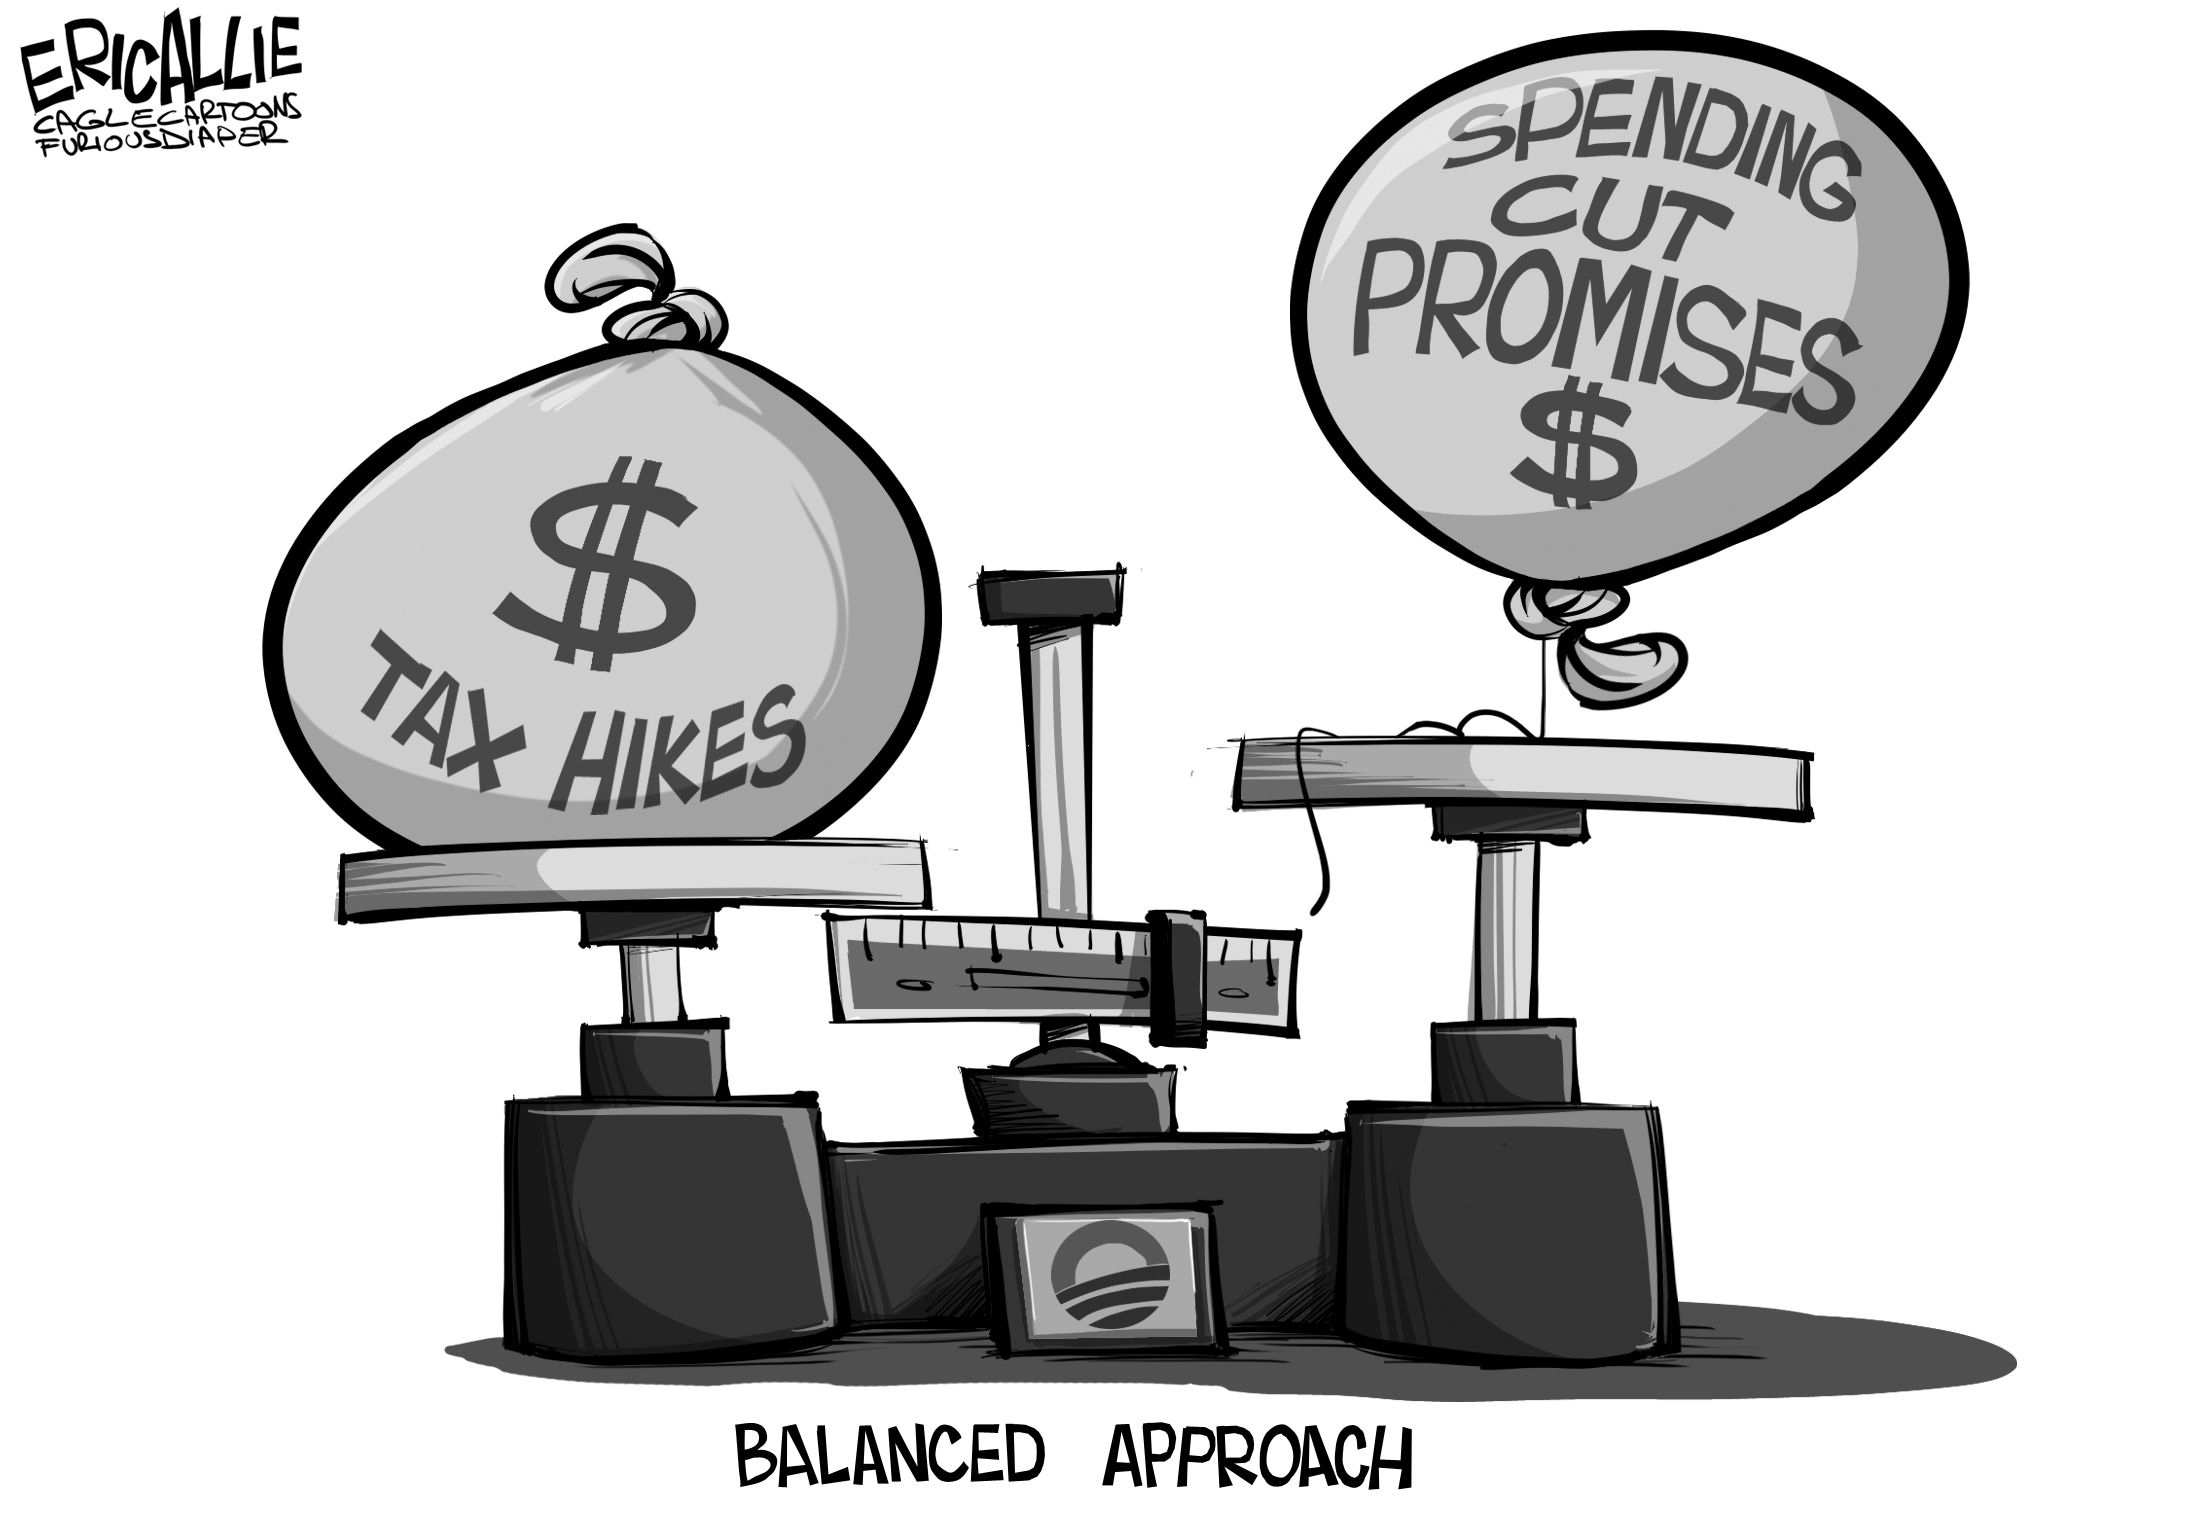 Obama's balanced approach